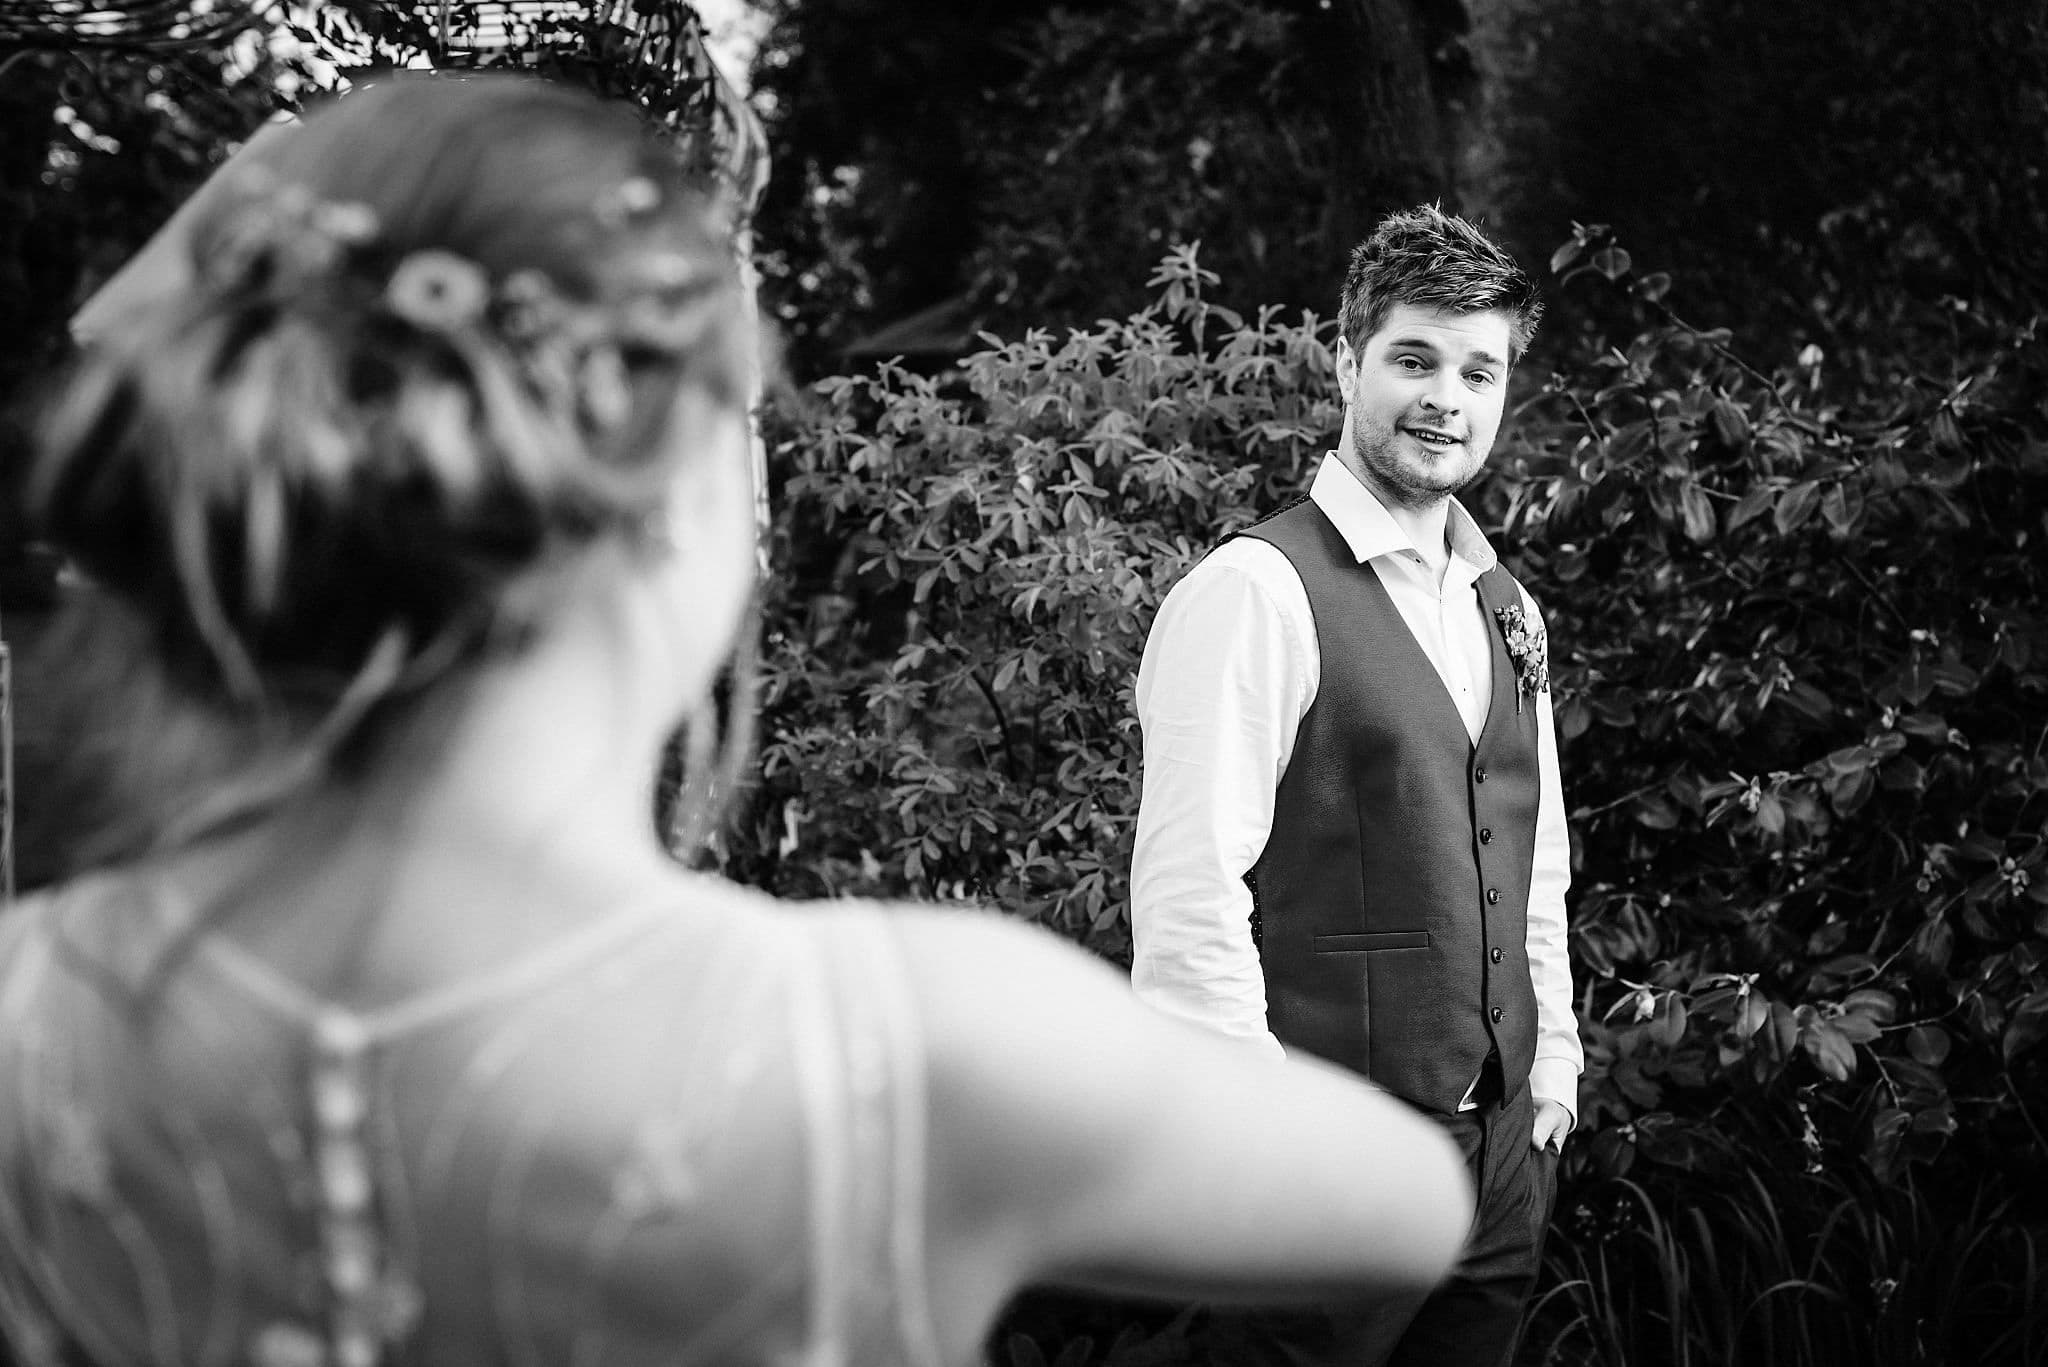 Parley Manor Wedding Photographer | Libra Photographic